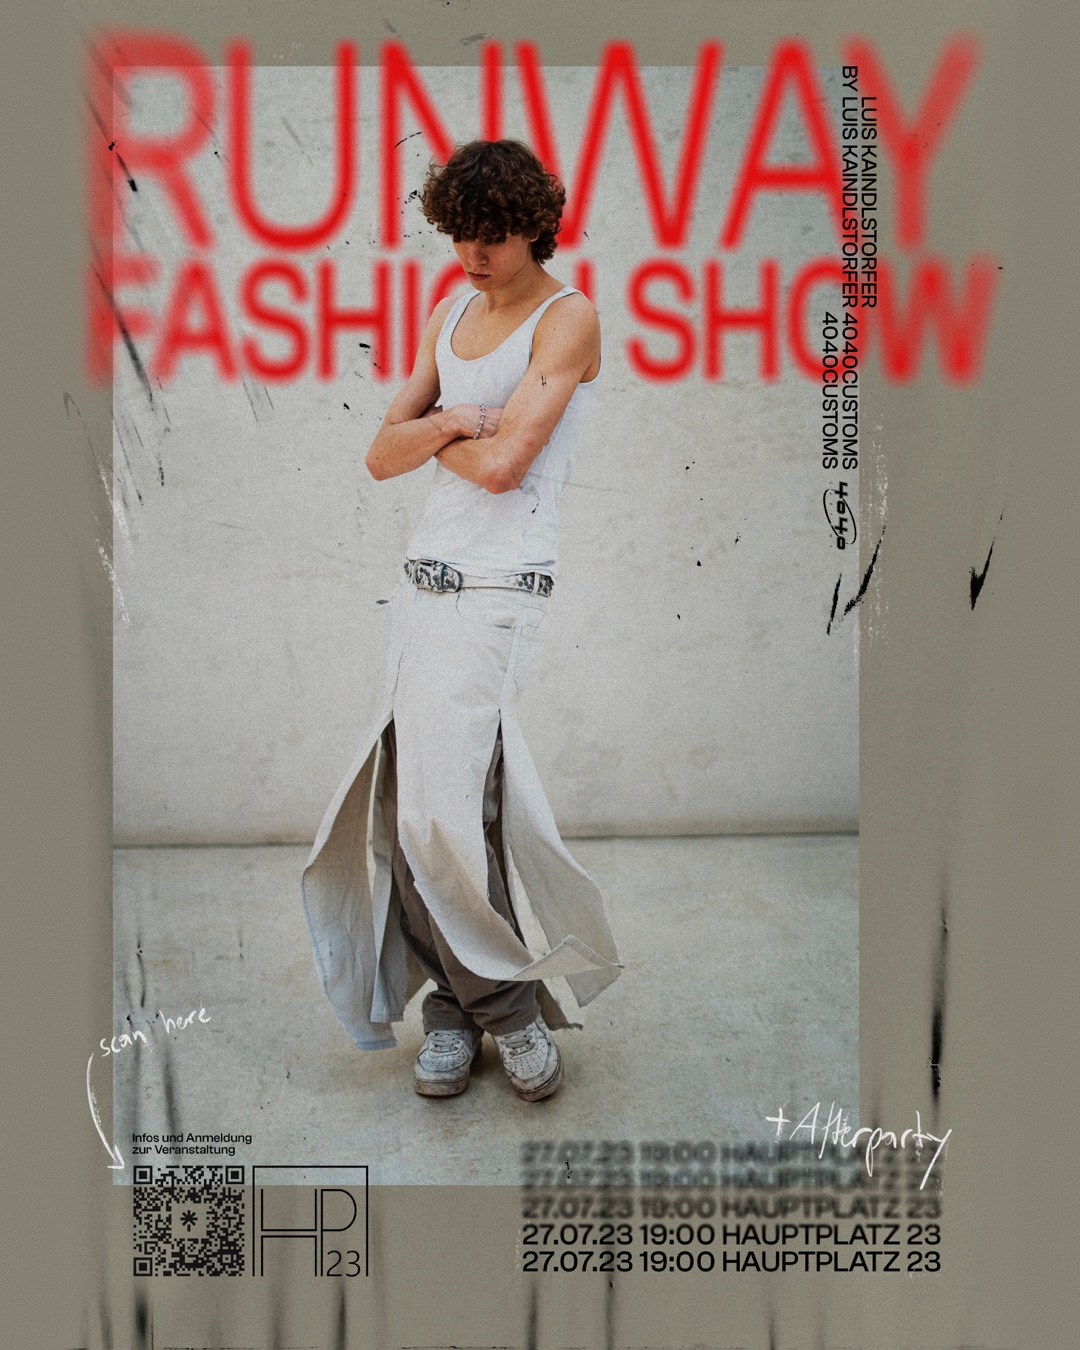 Runway Fashion Show by Luis Kaindlstorfer